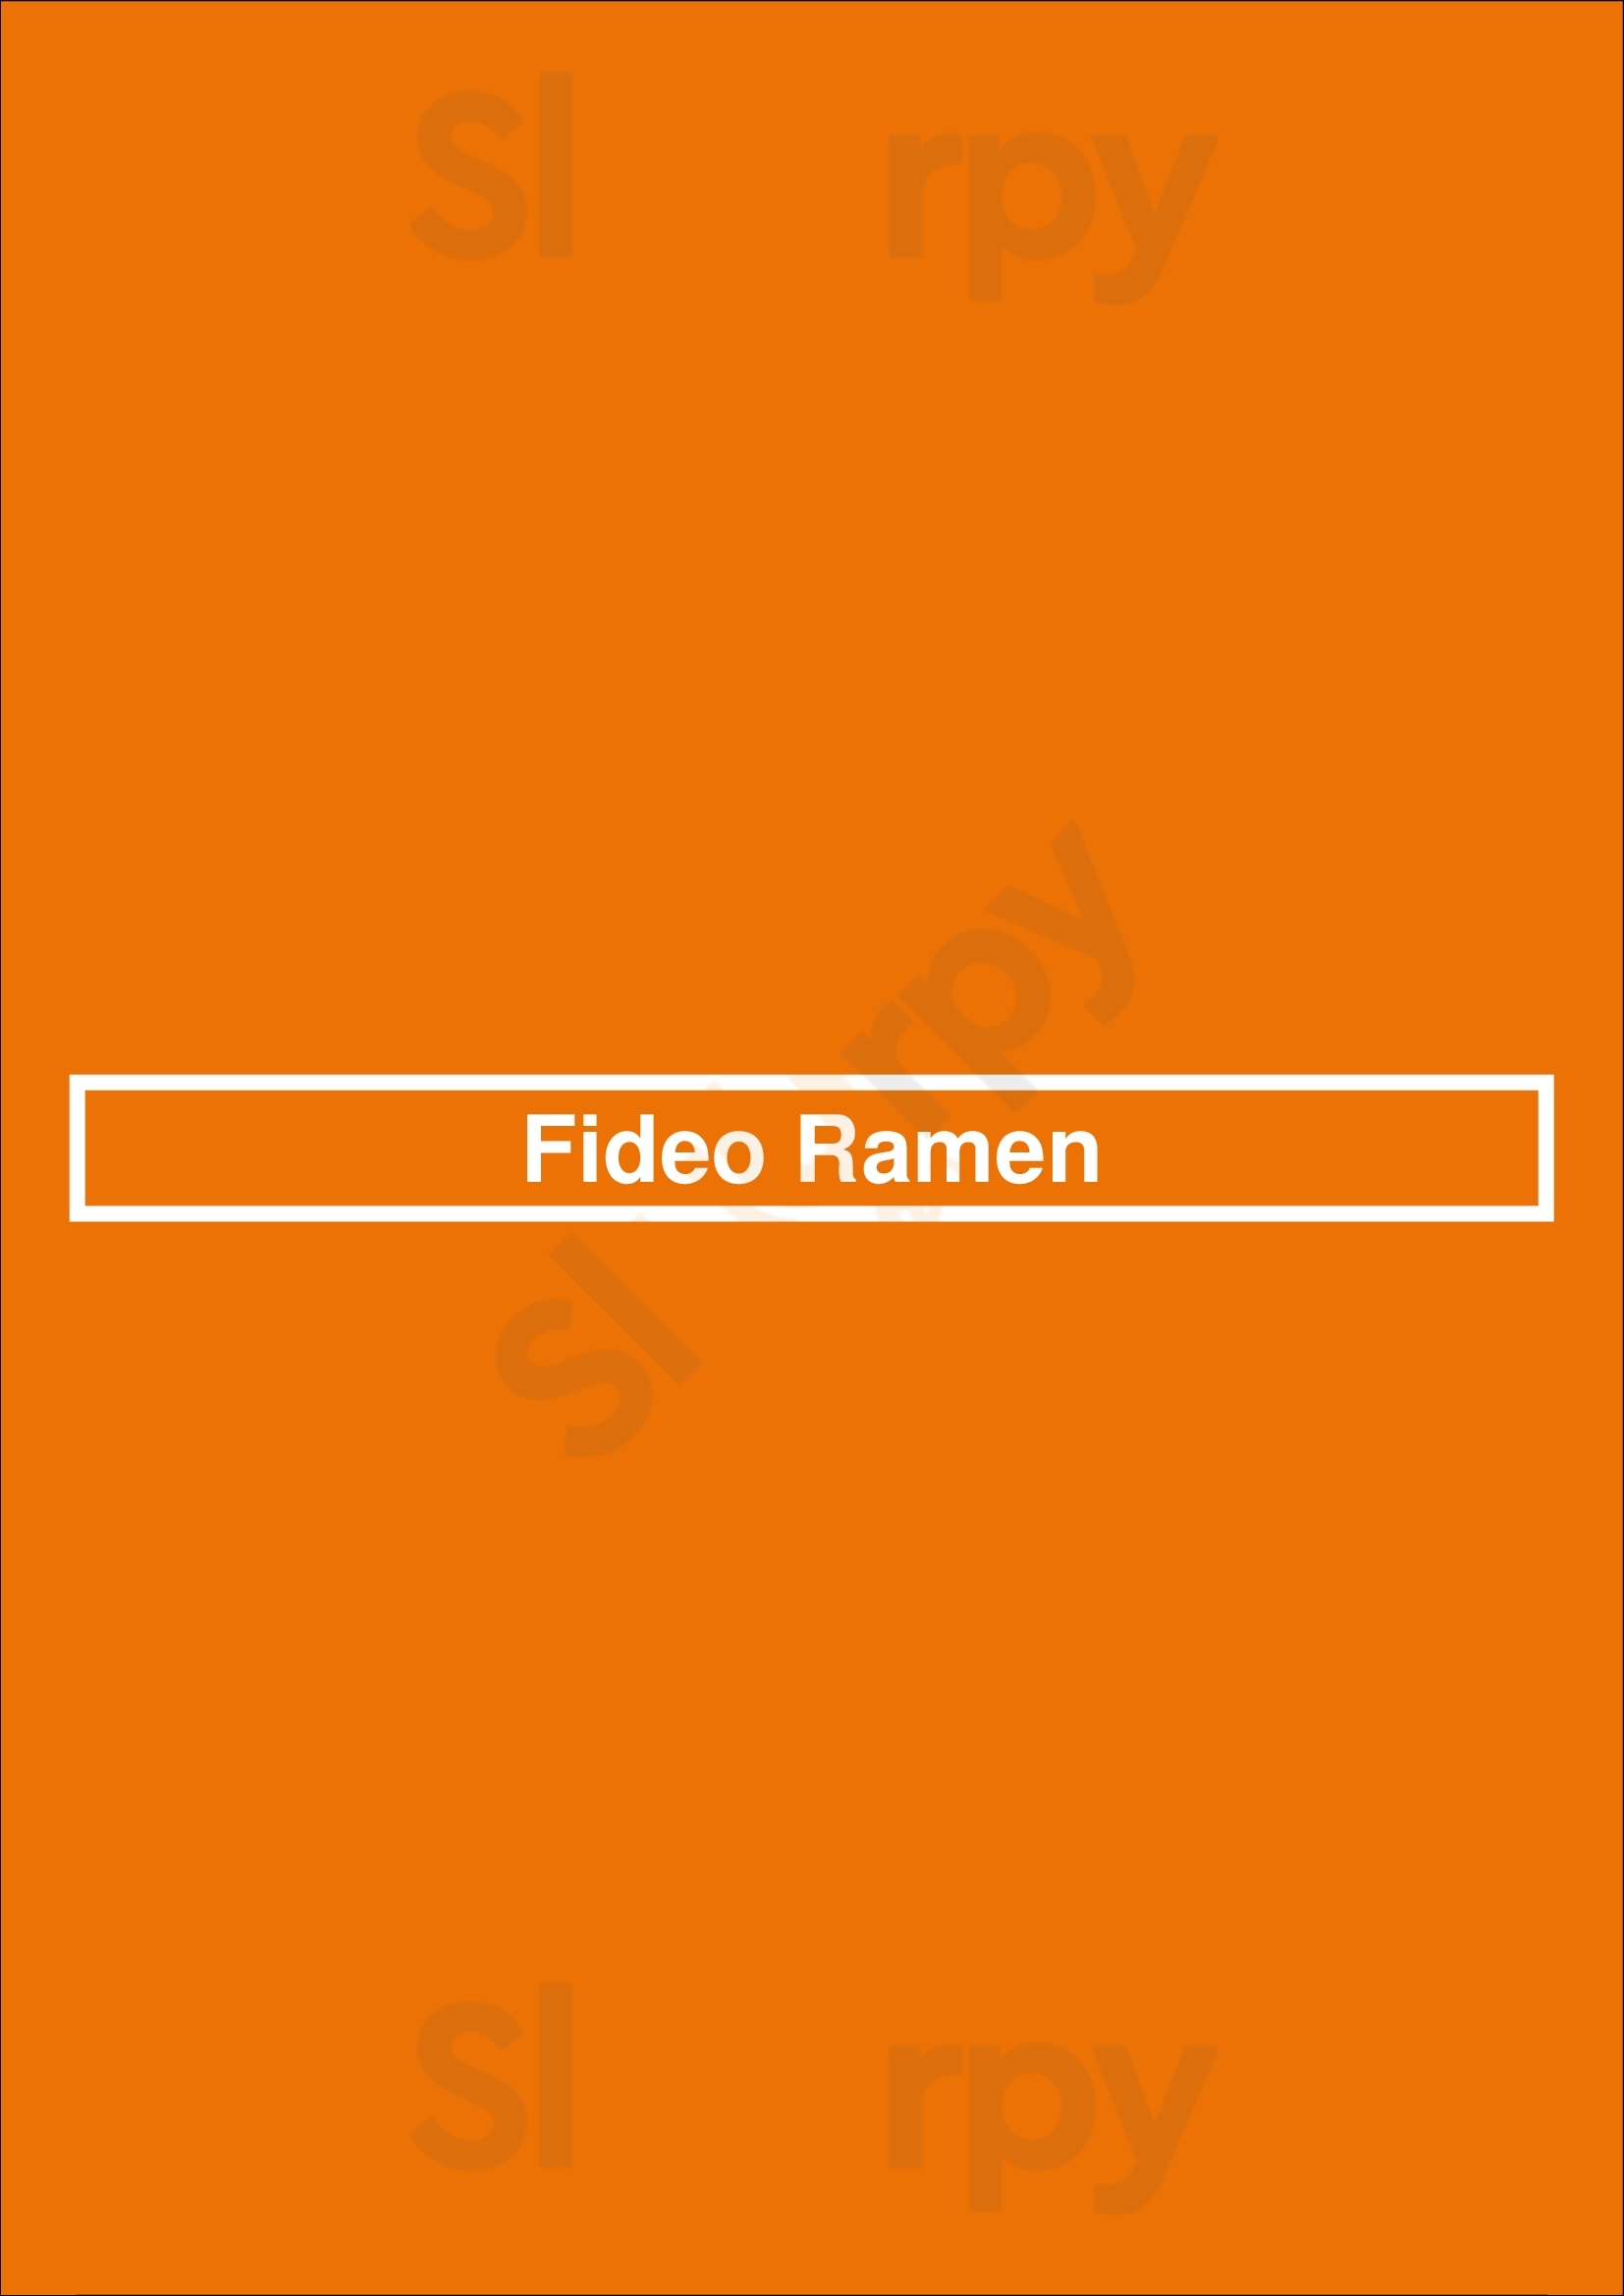 Fideo Ramen Málaga Menu - 1